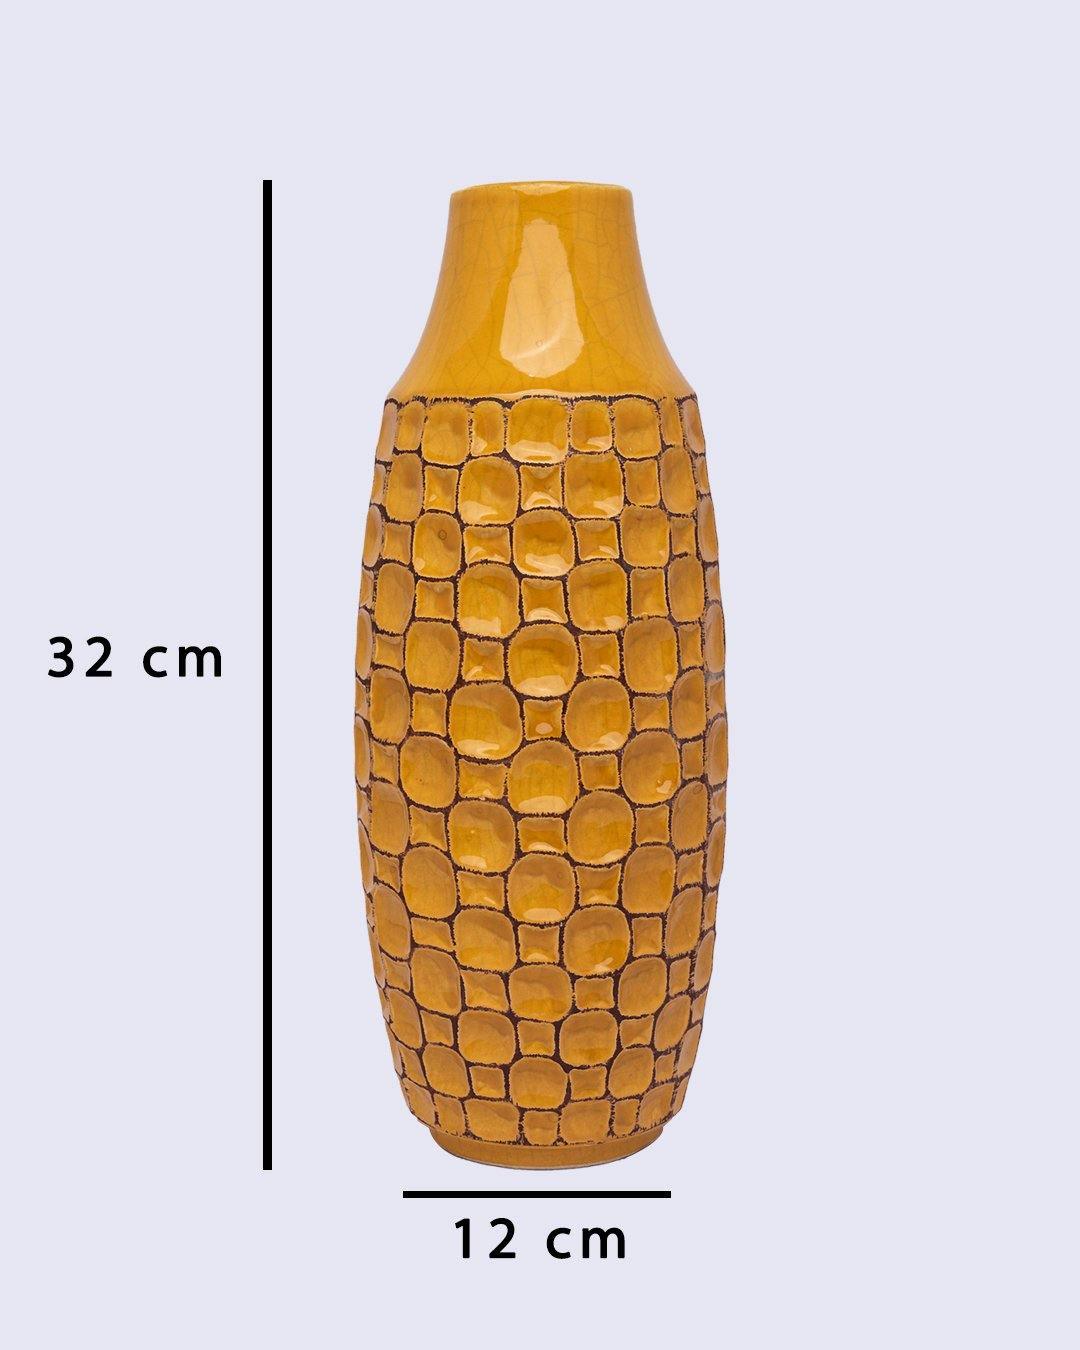 Vase, Modern Design, Yellow, Ceramic - MARKET 99